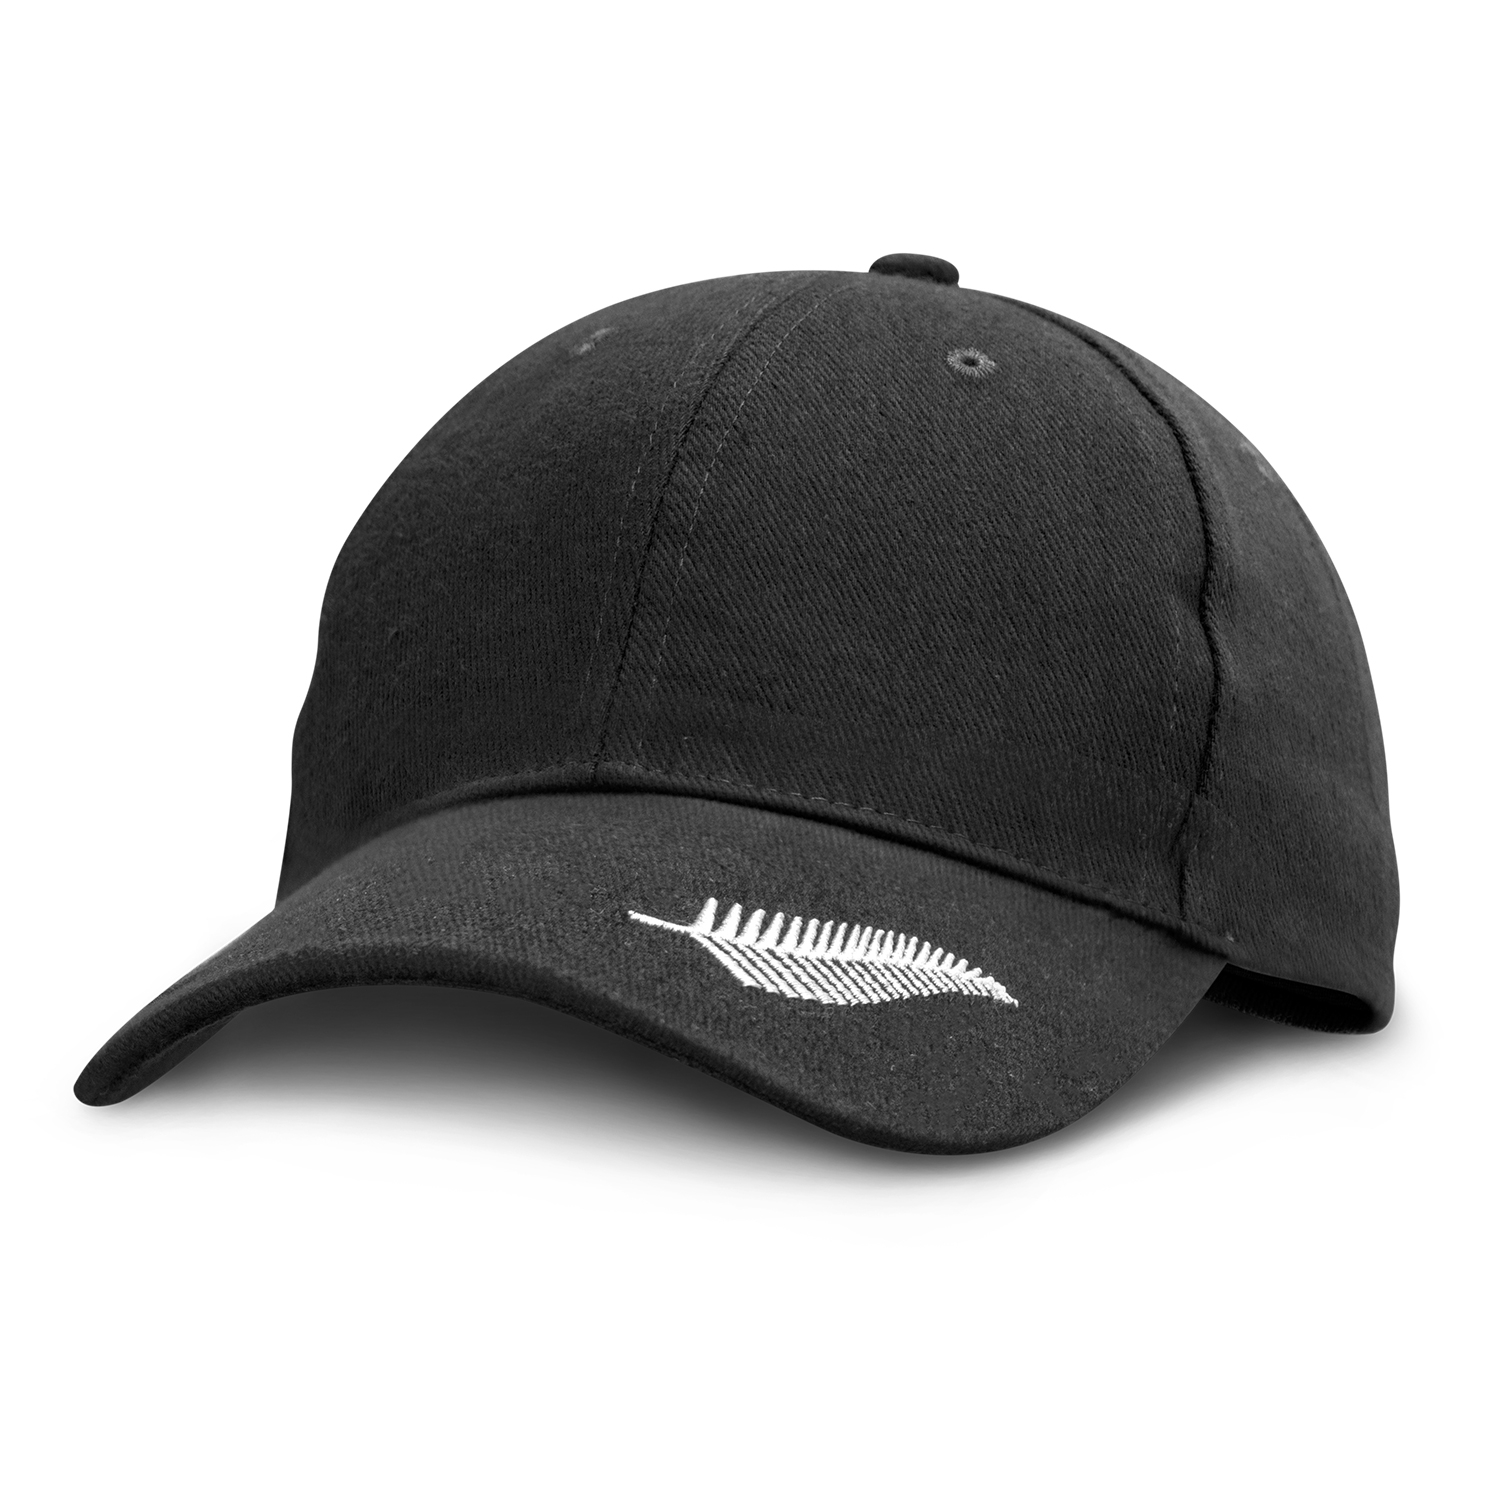 Headwear Express Kiwiana Cap cap